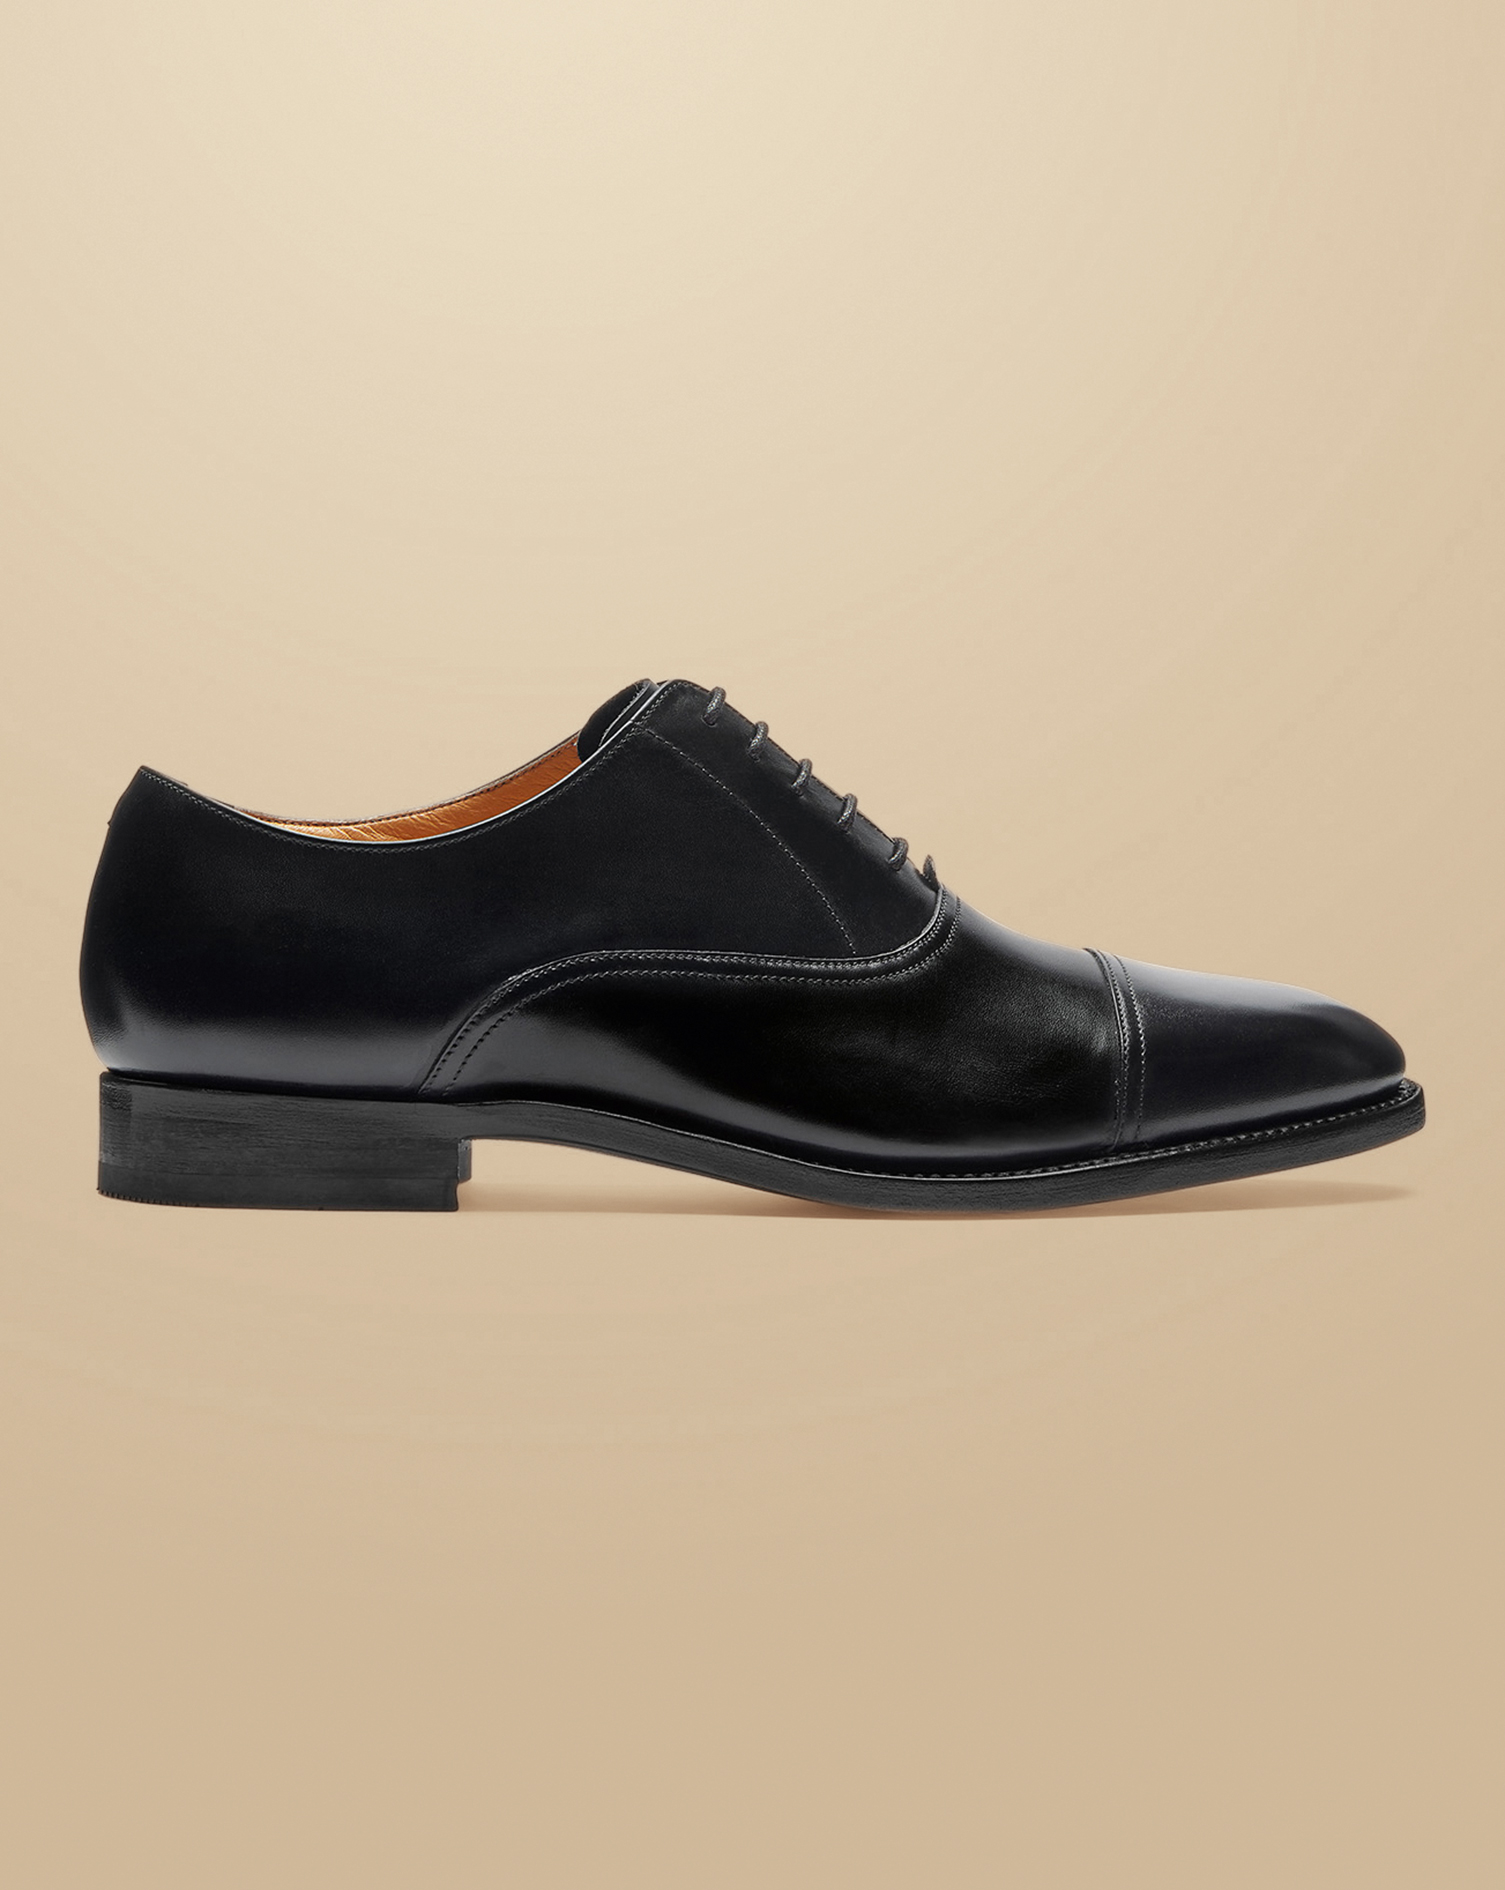 Men's Charles Tyrwhitt Oxford Shoes - Black Size 10 Leather
